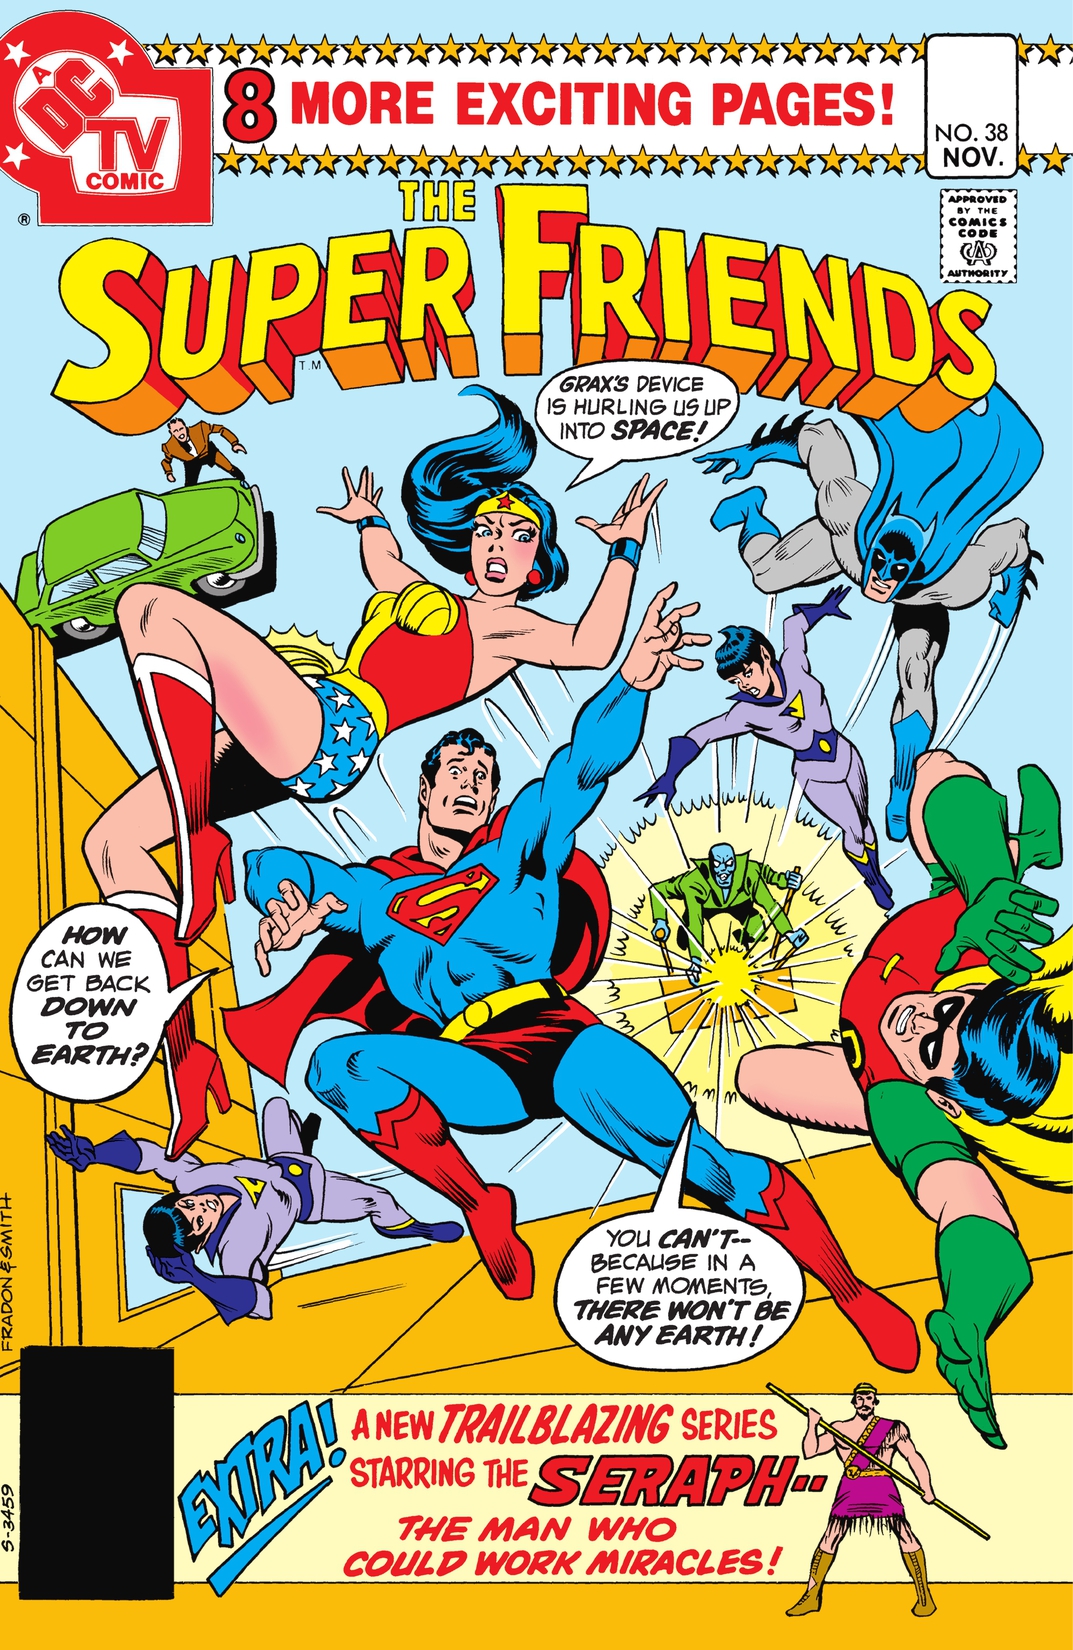 Super Friends (1976-1981) #38 preview images